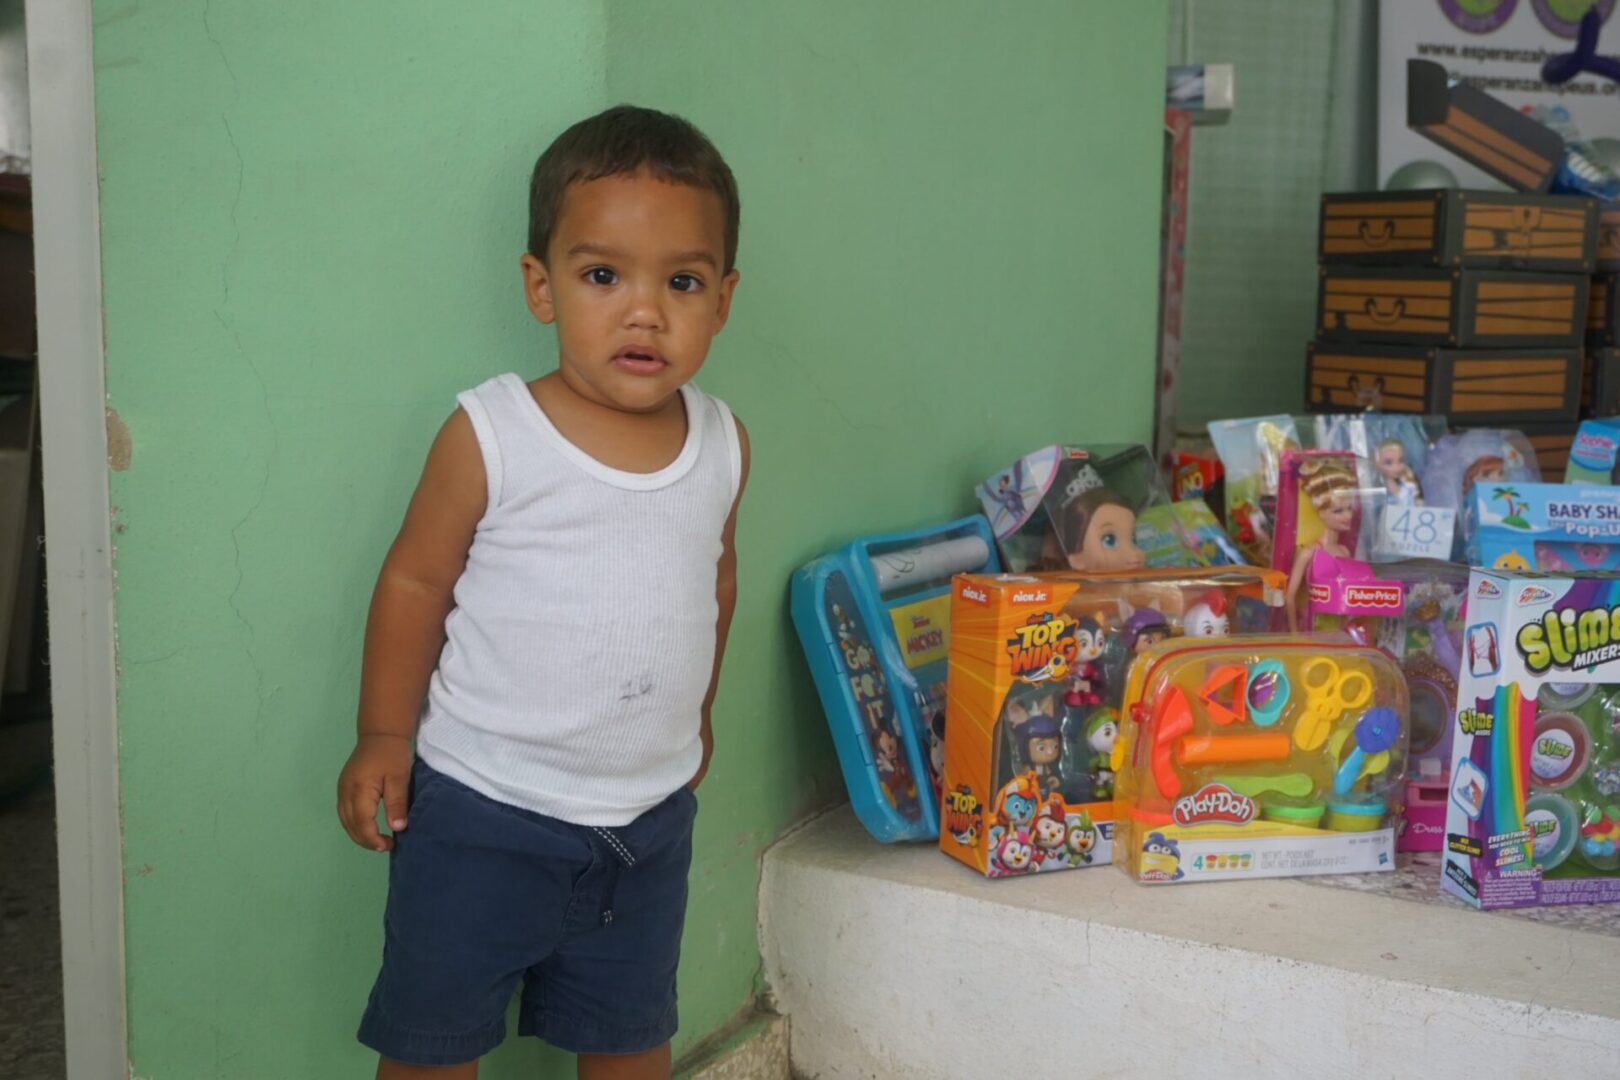 A little boy standing near the toys